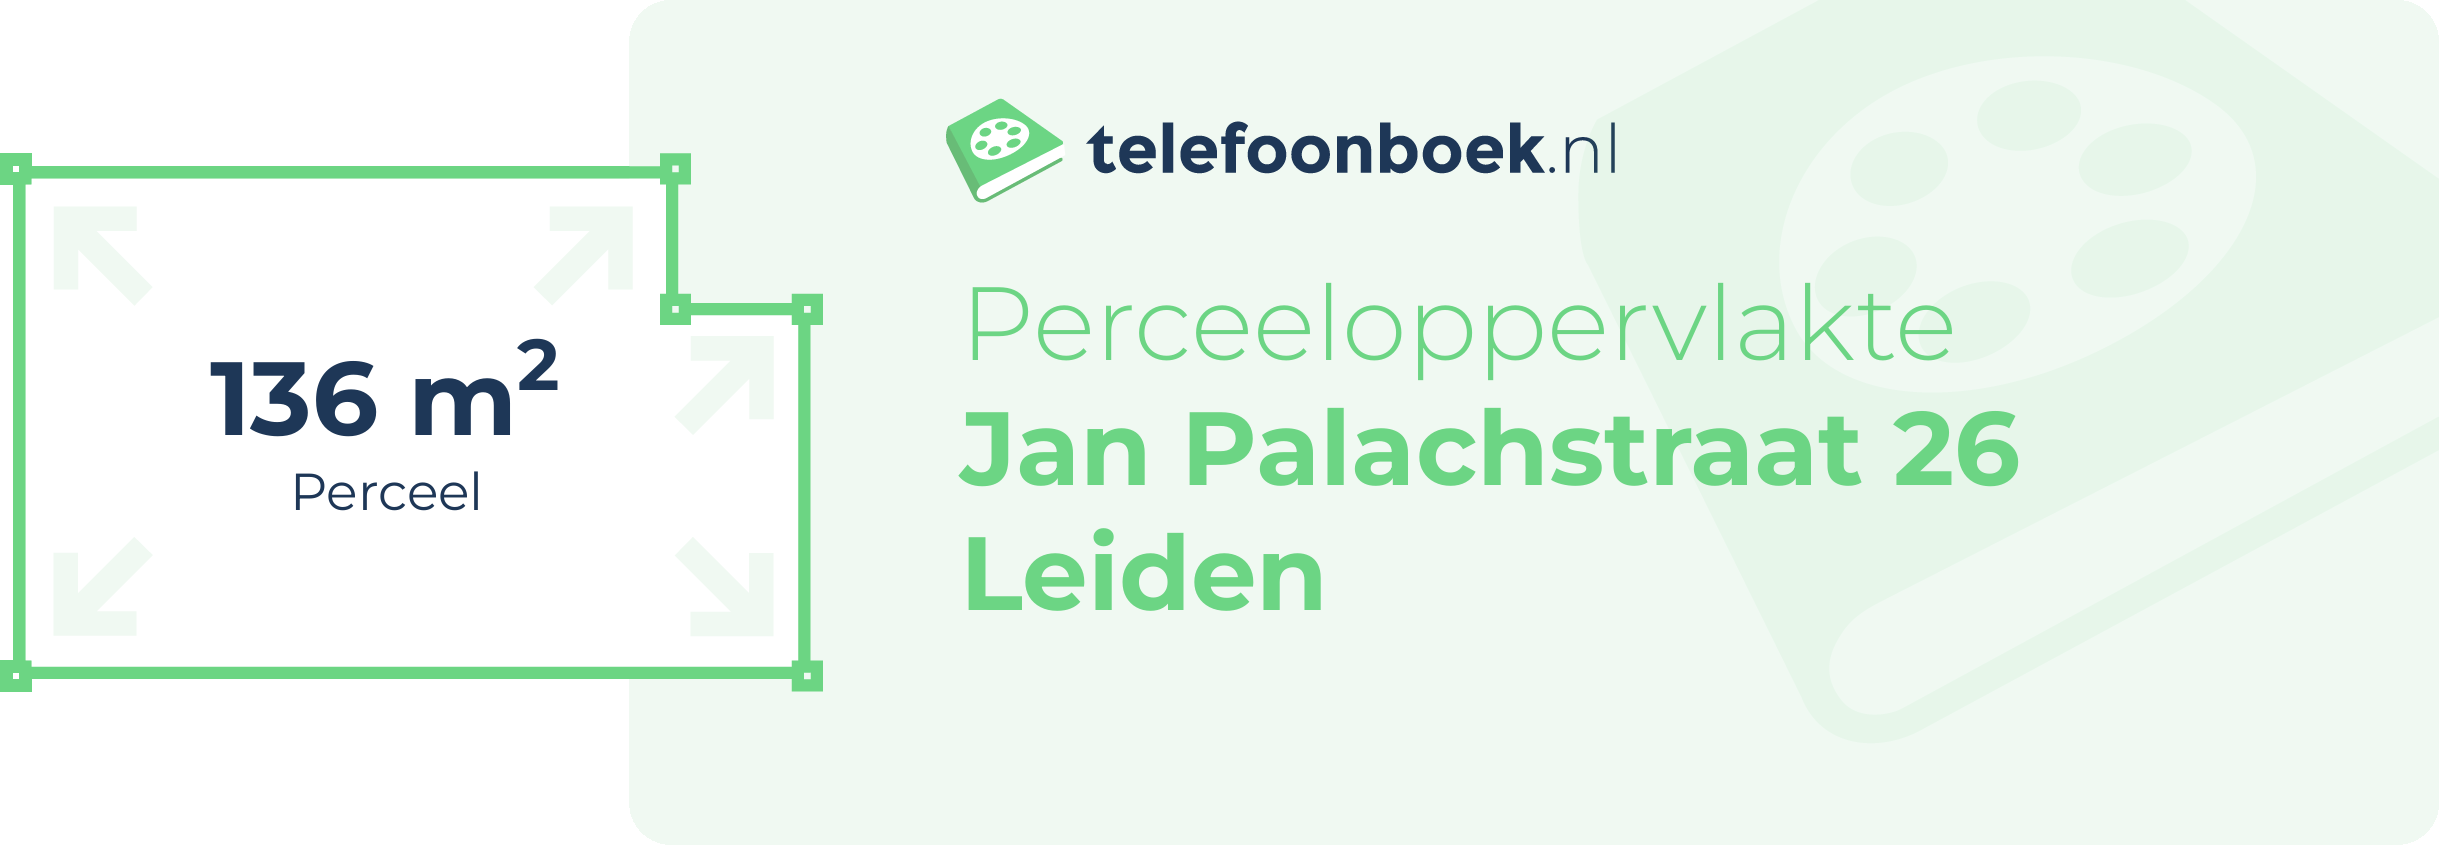 Perceeloppervlakte Jan Palachstraat 26 Leiden